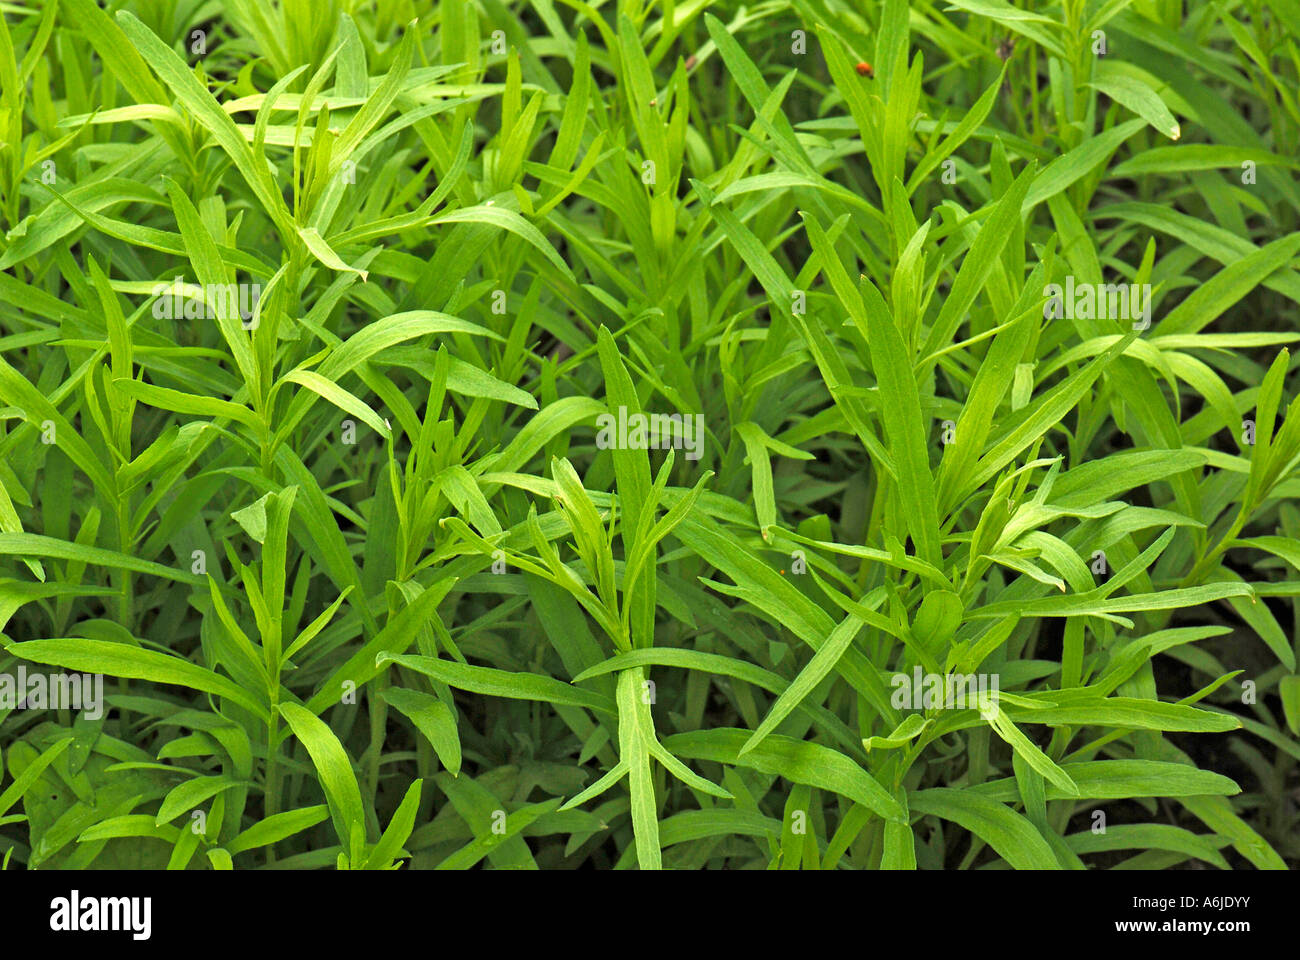 Tarragon (Artemisia dracunculus), leaves and stems Stock Photo